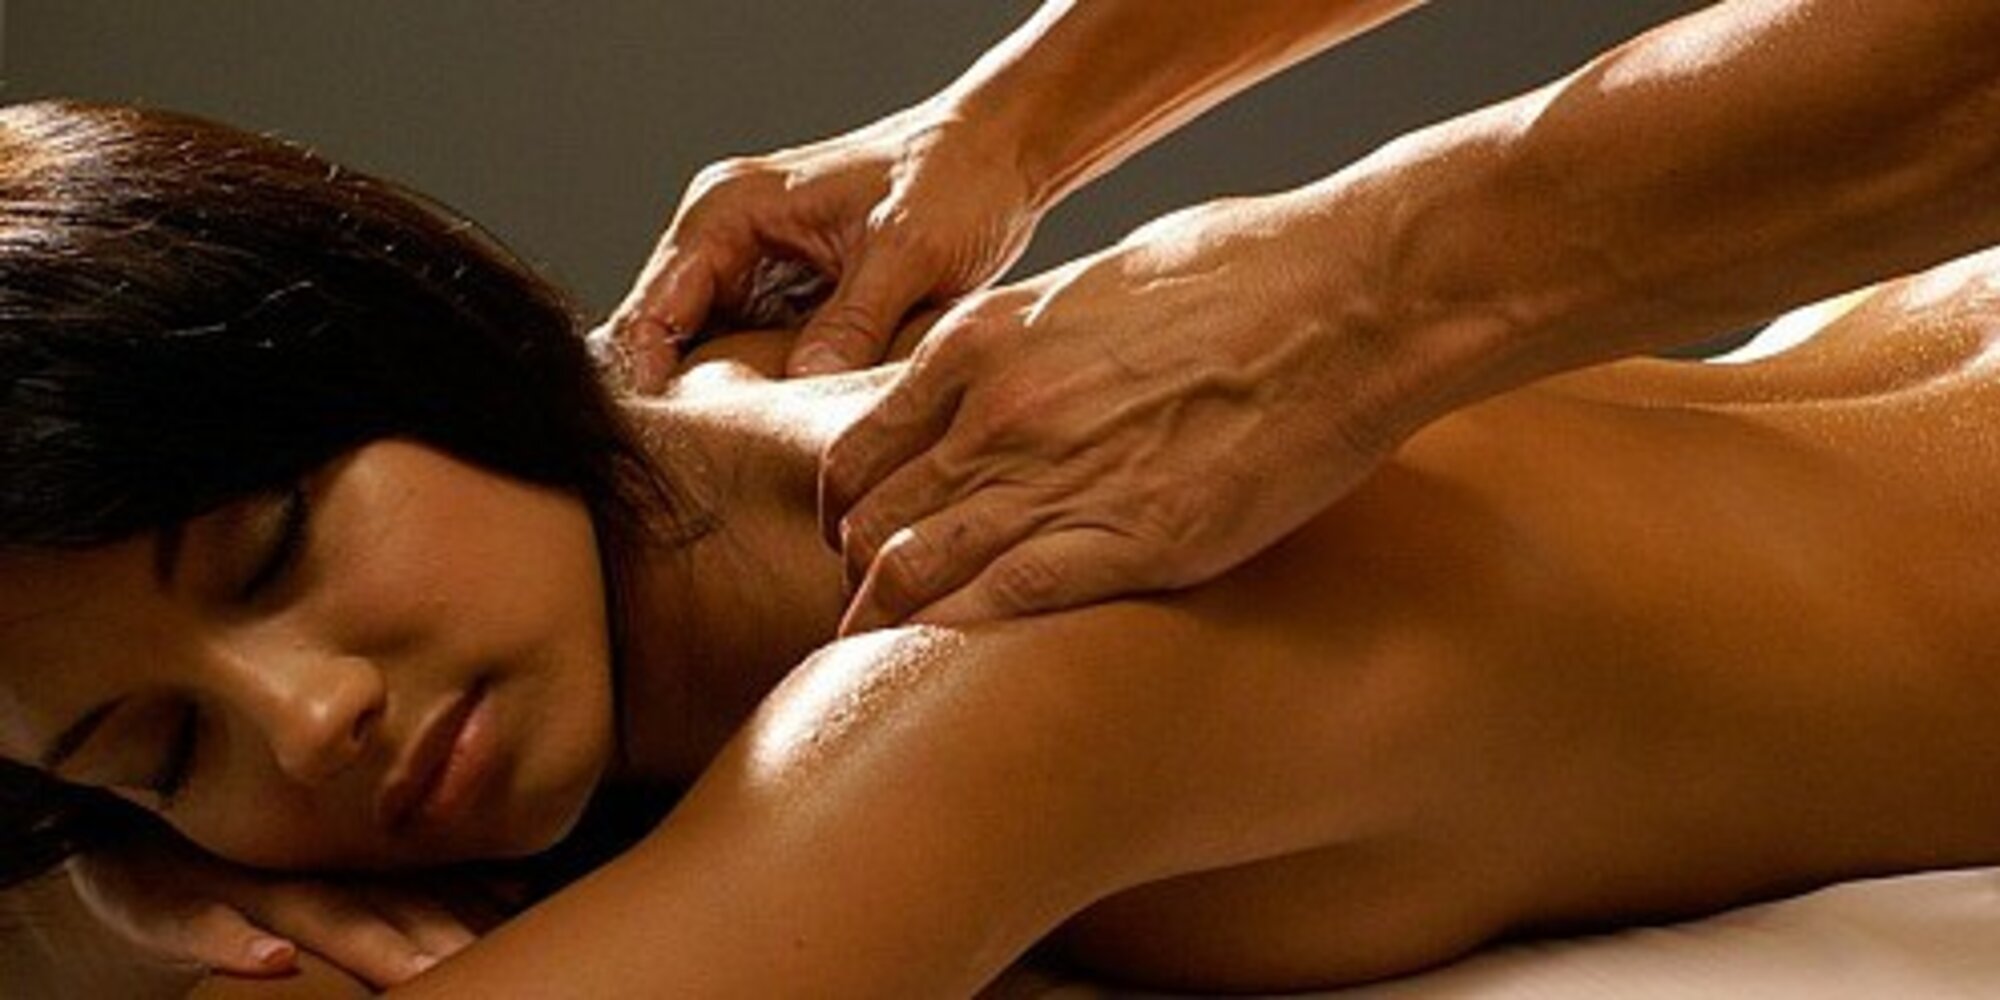 Women massage man